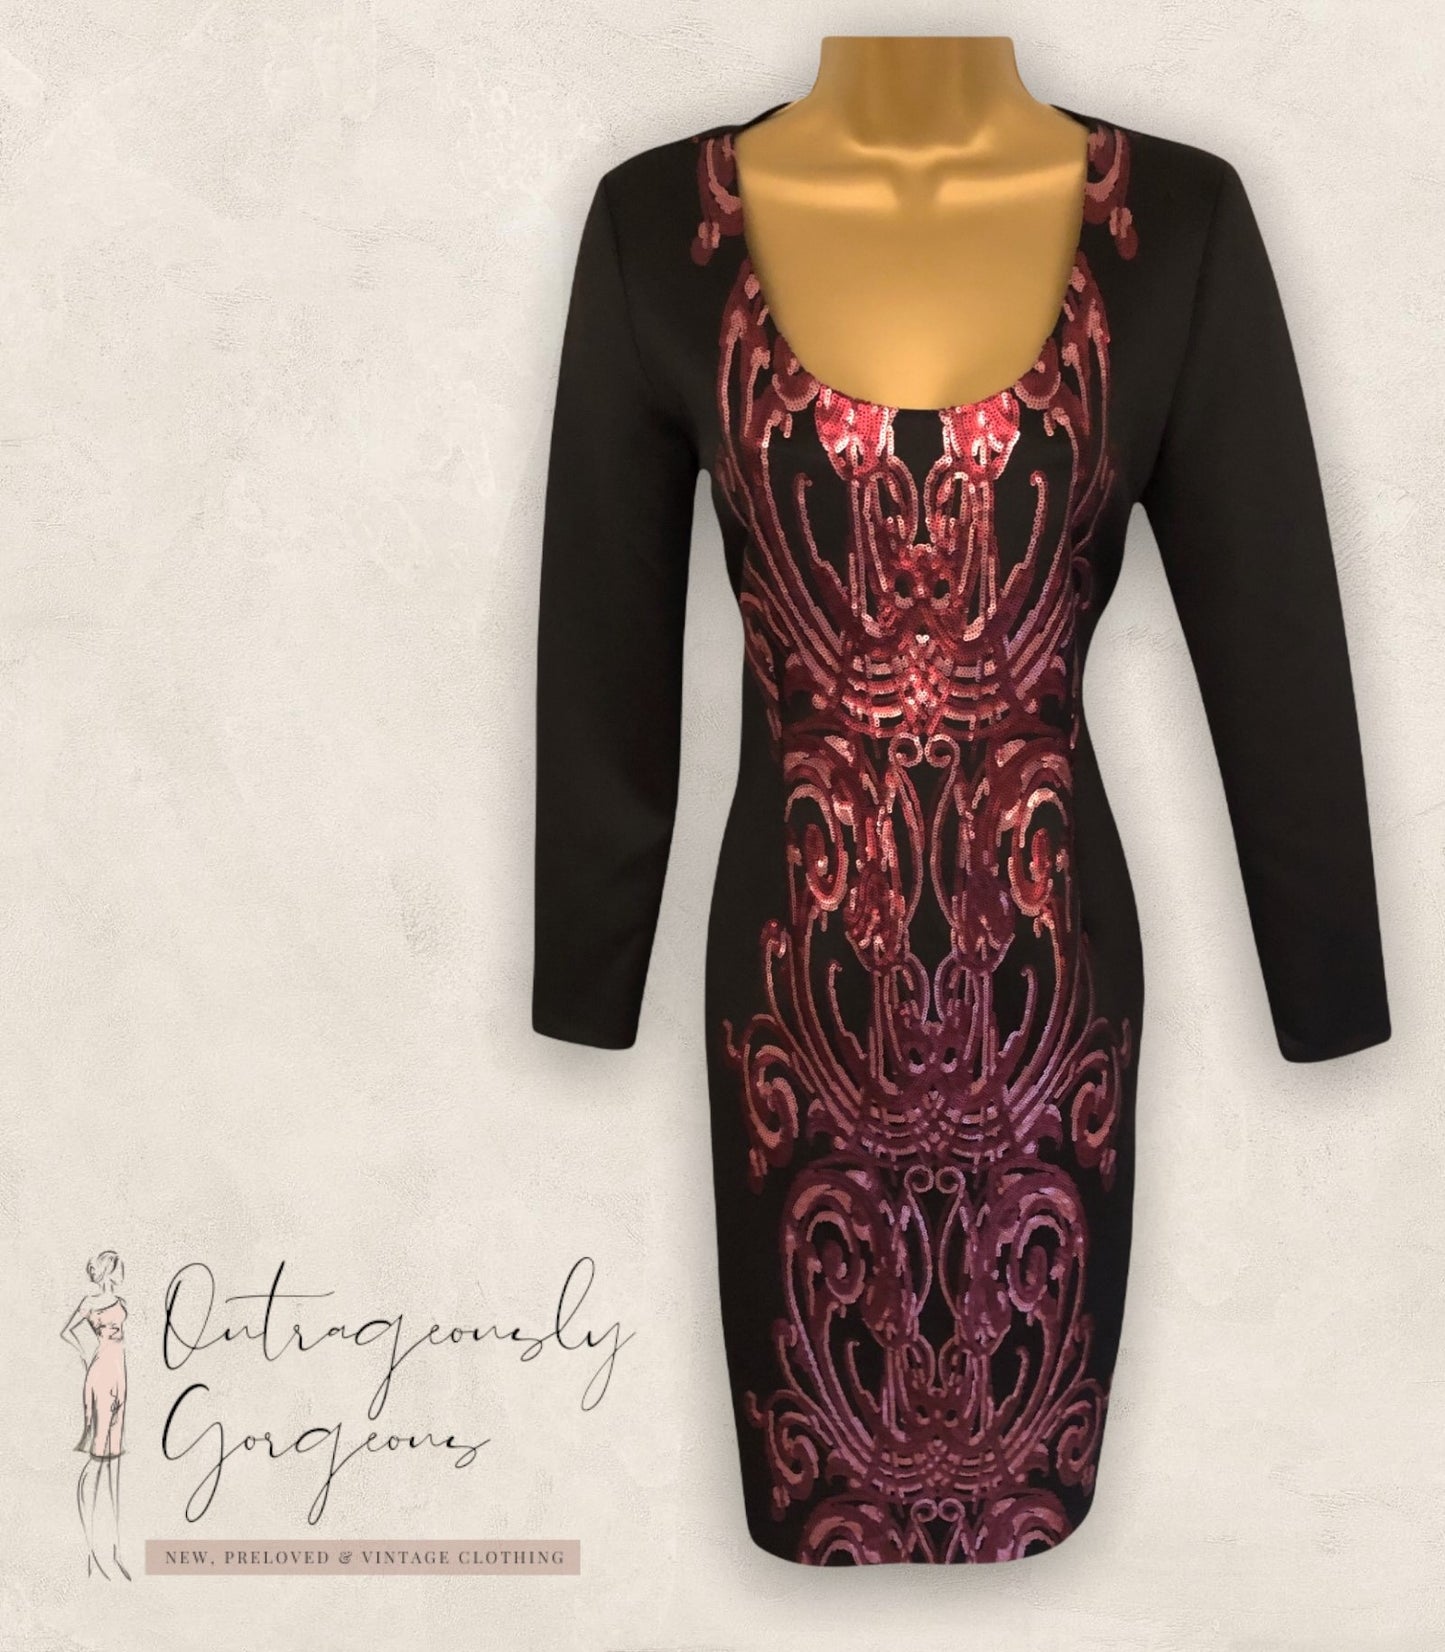 Michaela Louisa Black & Red Sequin Silhouette Dress UK 10 US 6 EU 38 Timeless Fashions